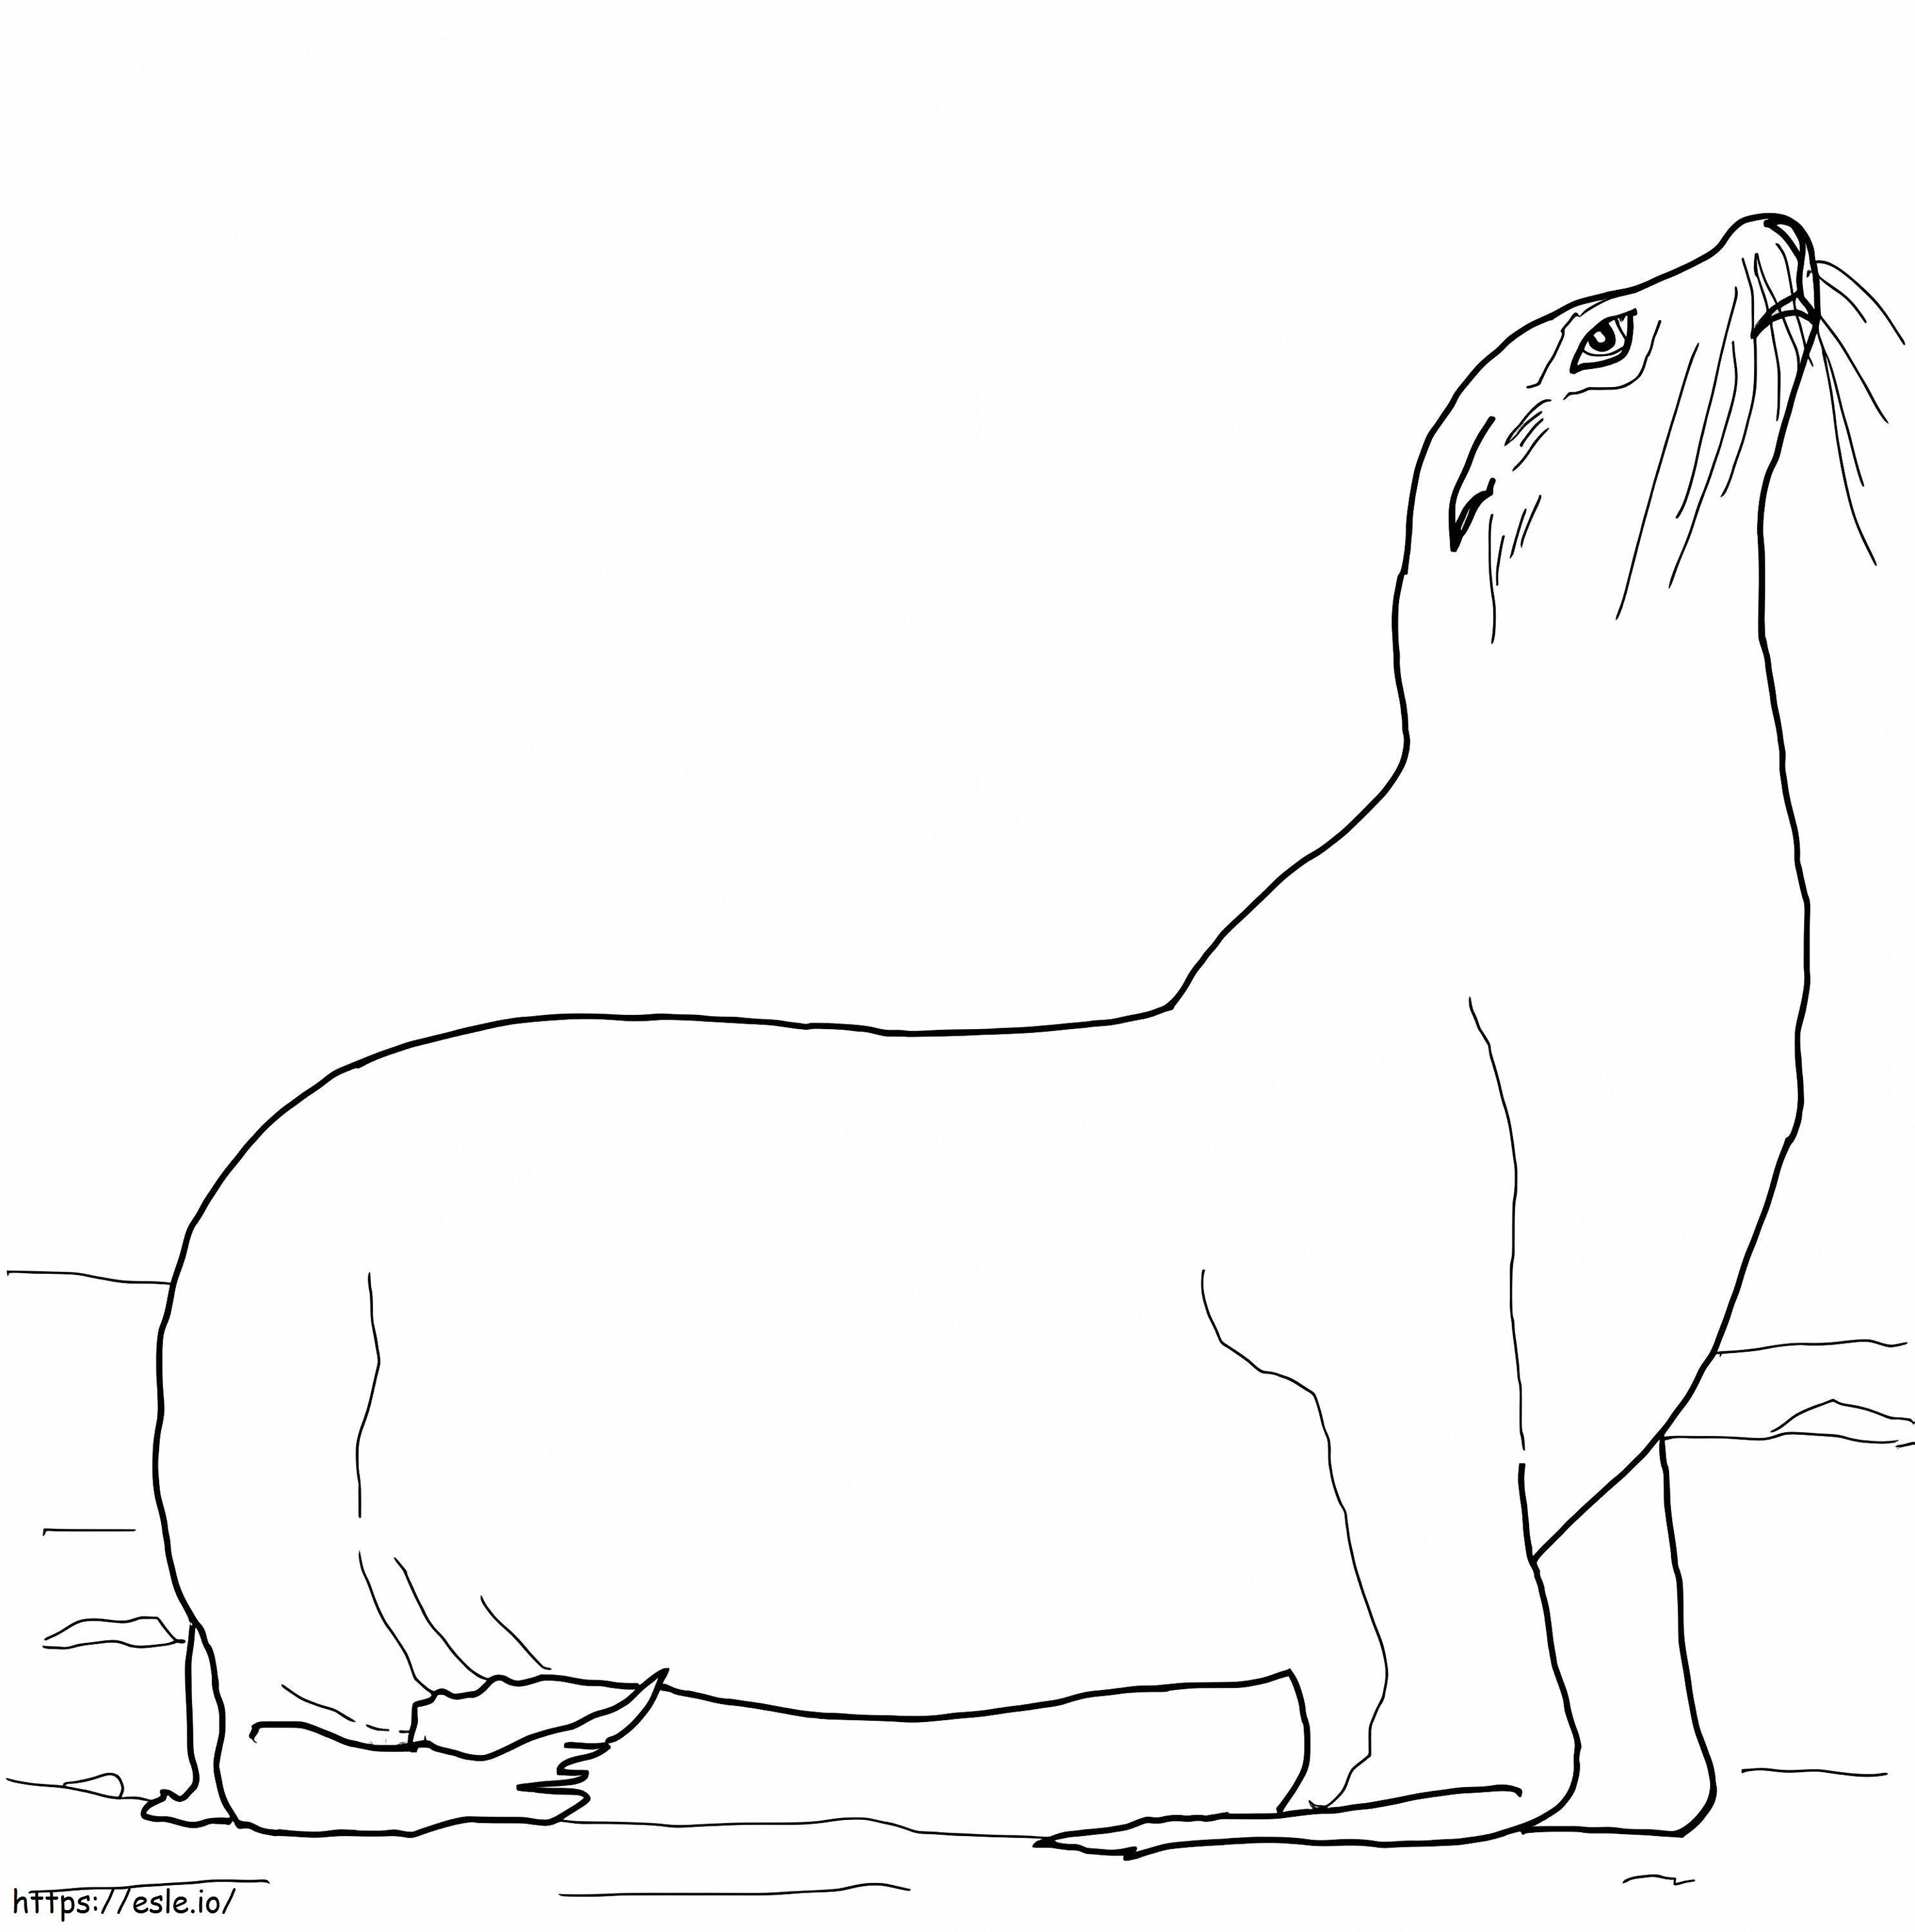 Kalifornijski lew morski 1 kolorowanka